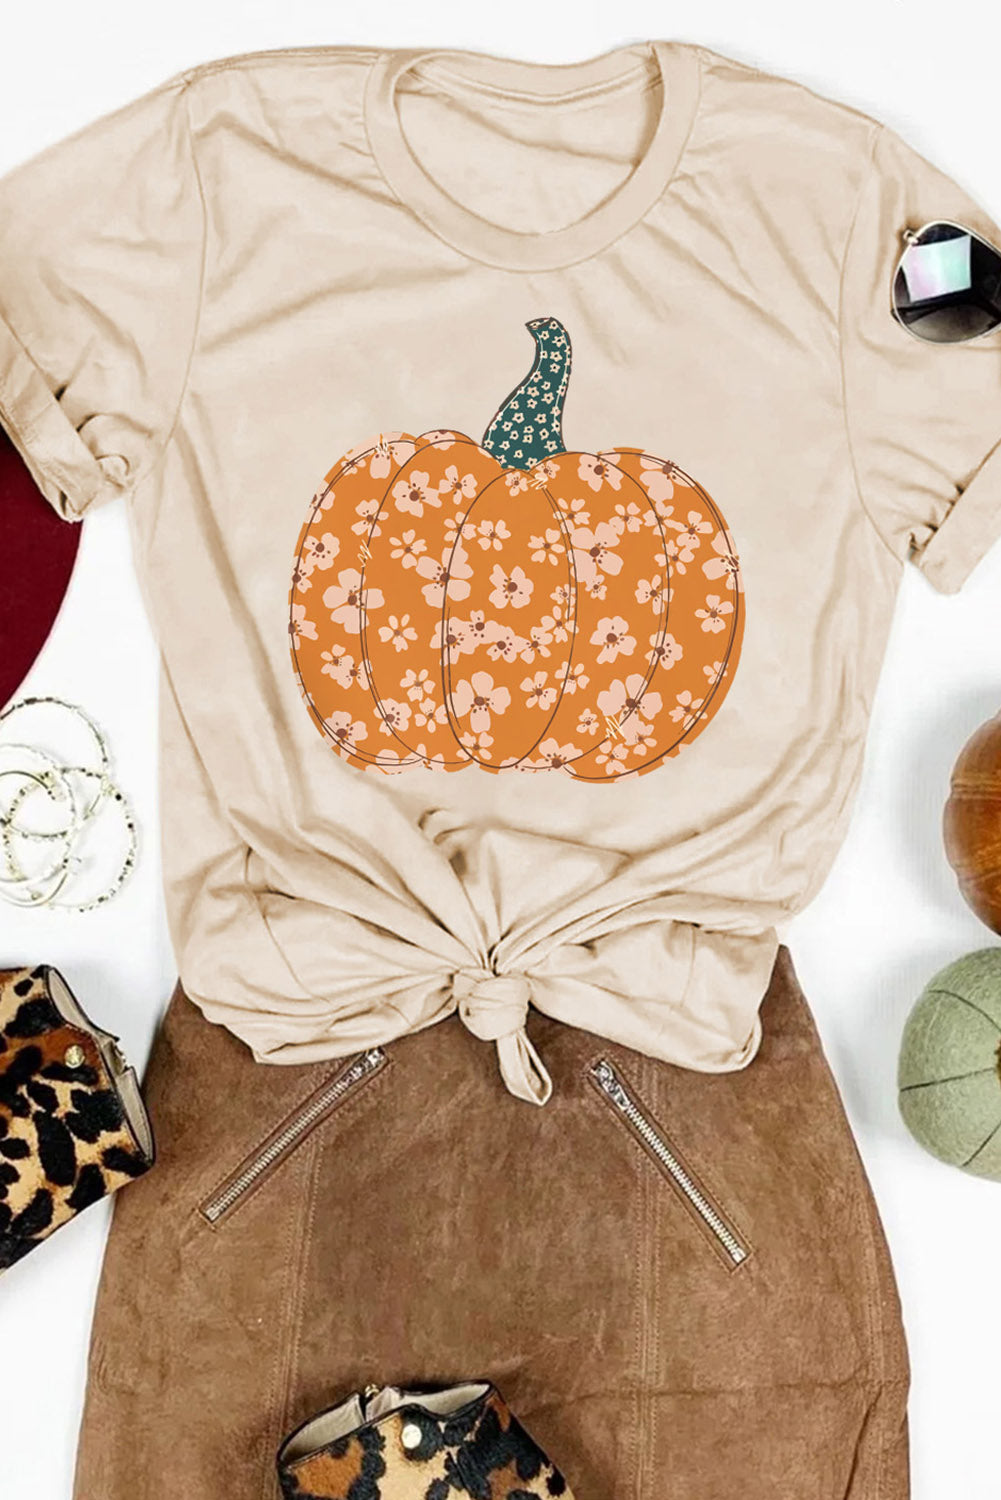 Khaki Sweet Floral Pumpkin Graphic Tee Item NO.: 2560